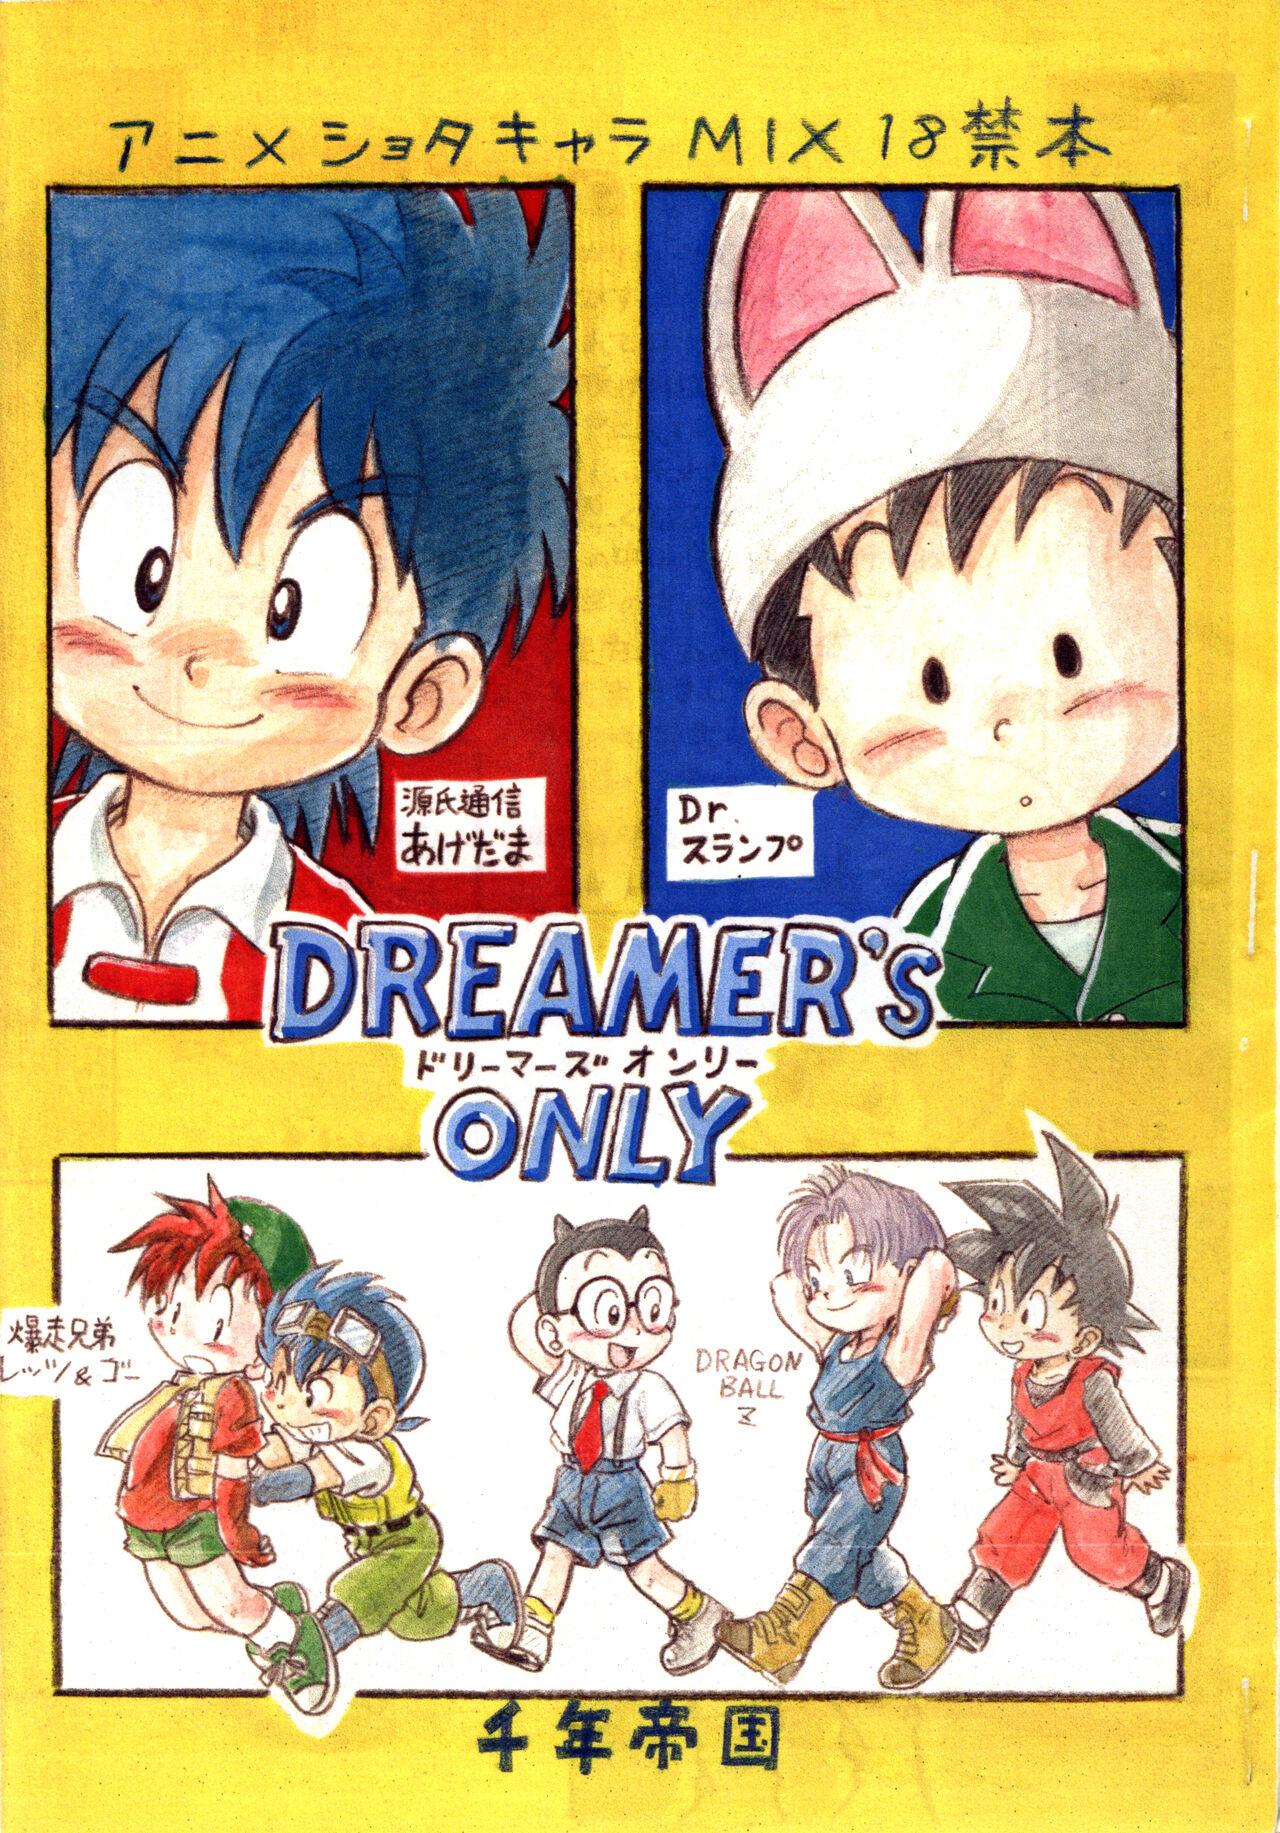 Classic DREAMER’S ONLY - Dragon ball z Bakusou kyoudai lets and go Dr. slump Genji tsuushin agedama Rope - Picture 1